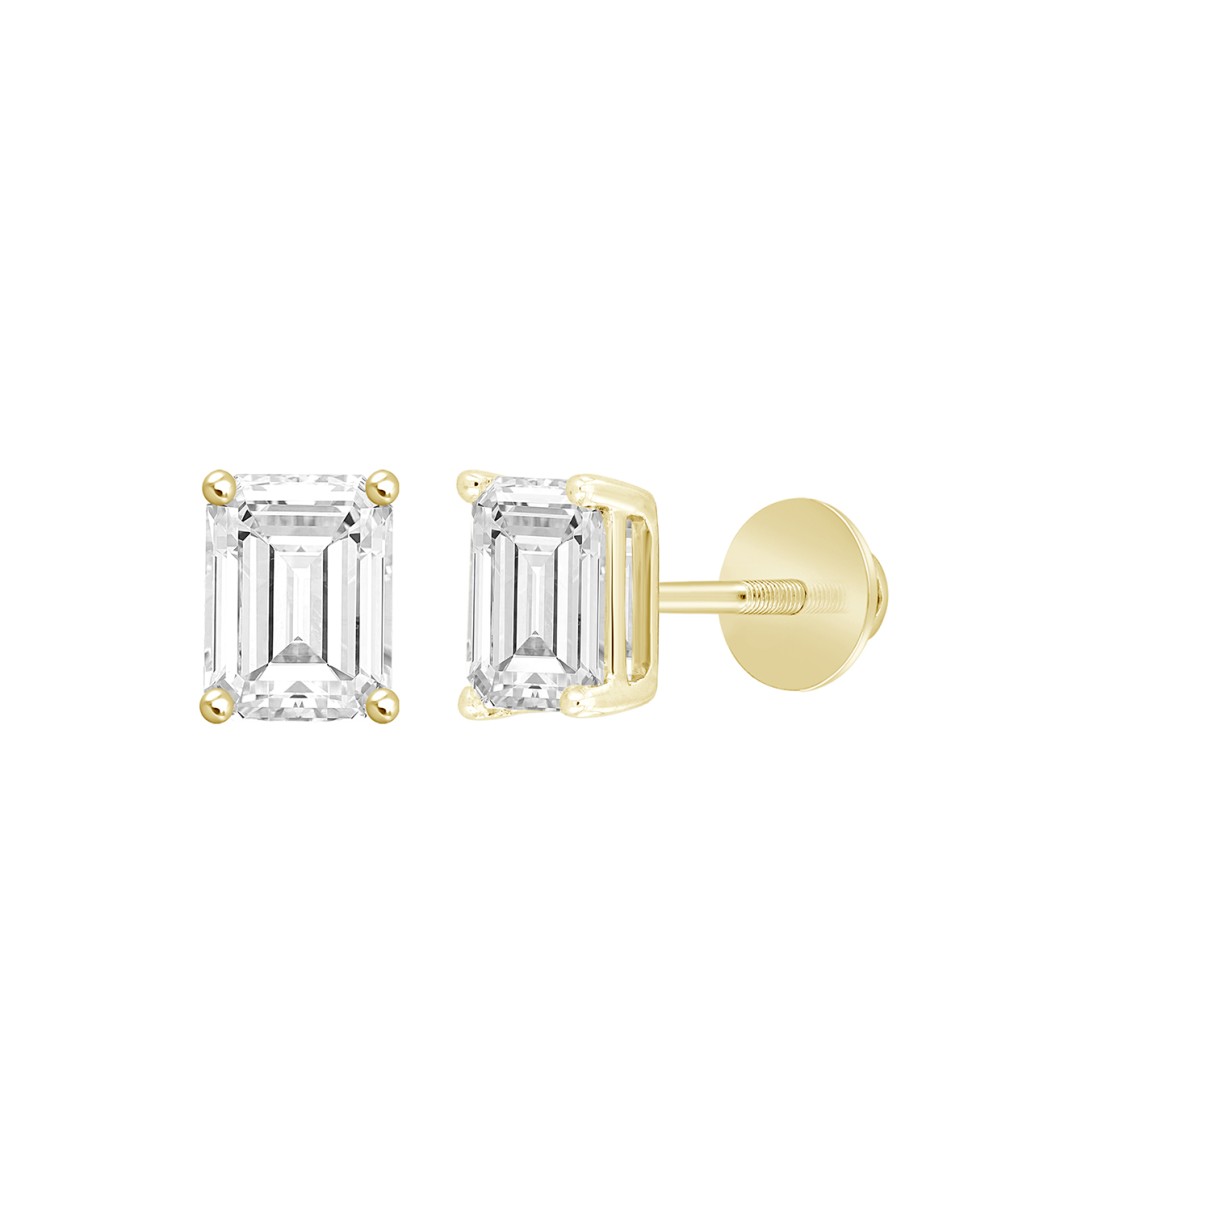 LADIES SOLITAIRE EARRINGS 1/2CT EMERALD DIAMOND 14K YELLOW GOLD